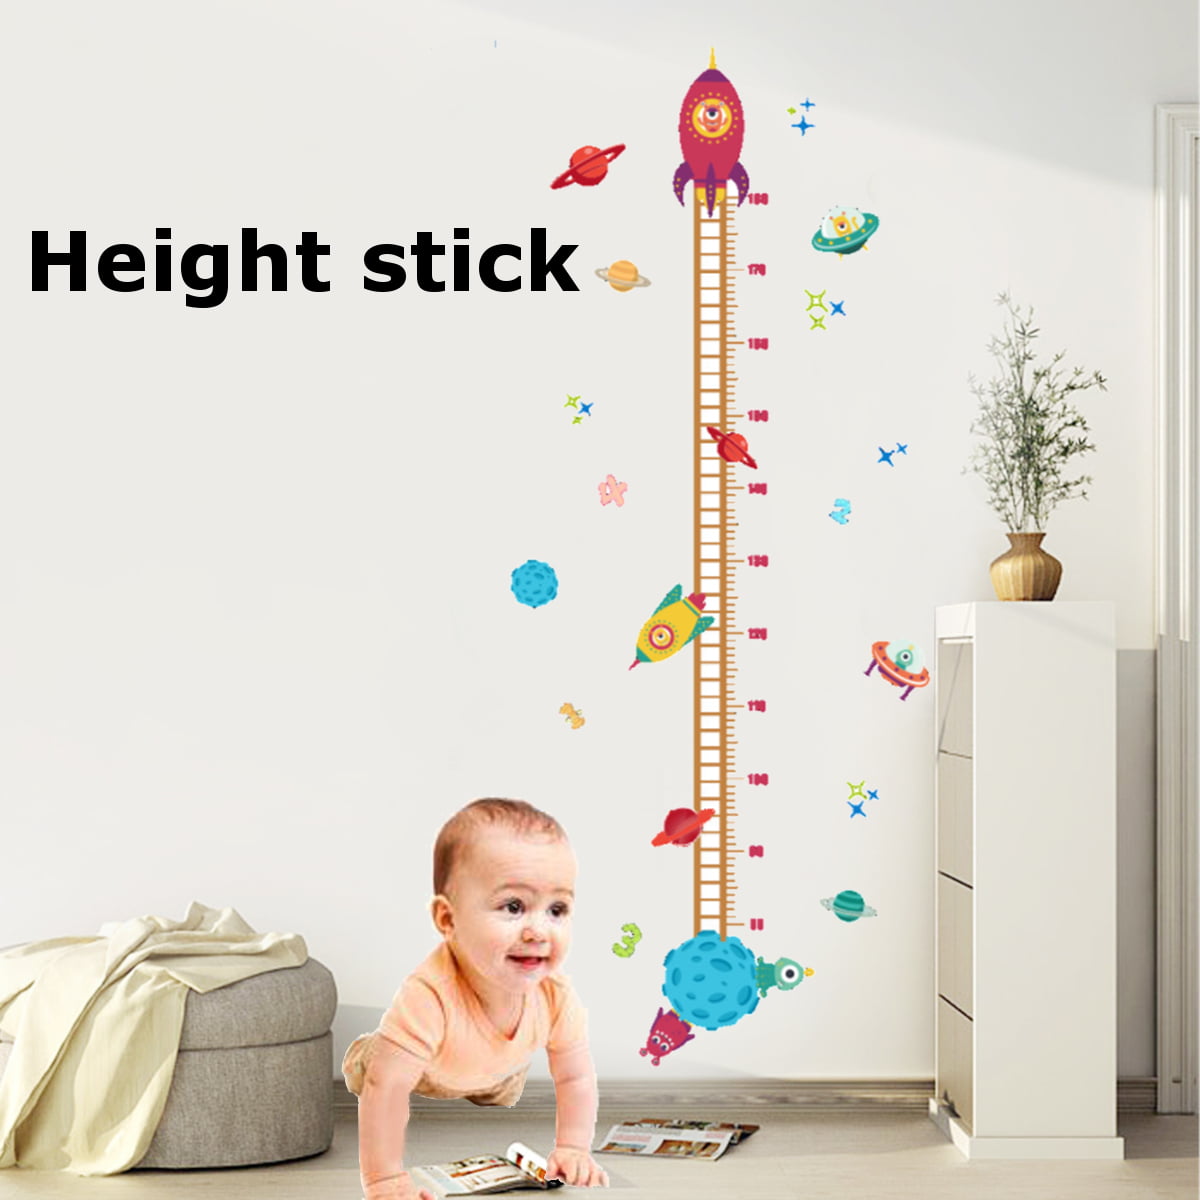 Kids Child Hight growth Measure chart cute art stickers wall room decor girl boy 